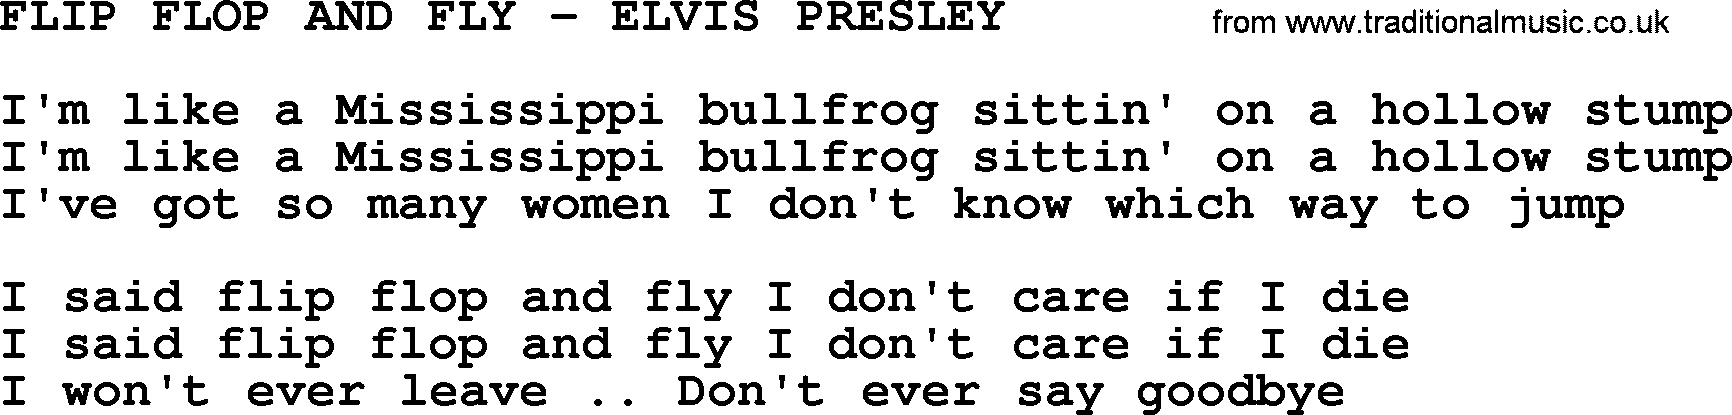 Elvis Presley song: Flip Flop And Fly-Elvis Presley-.txt lyrics and chords